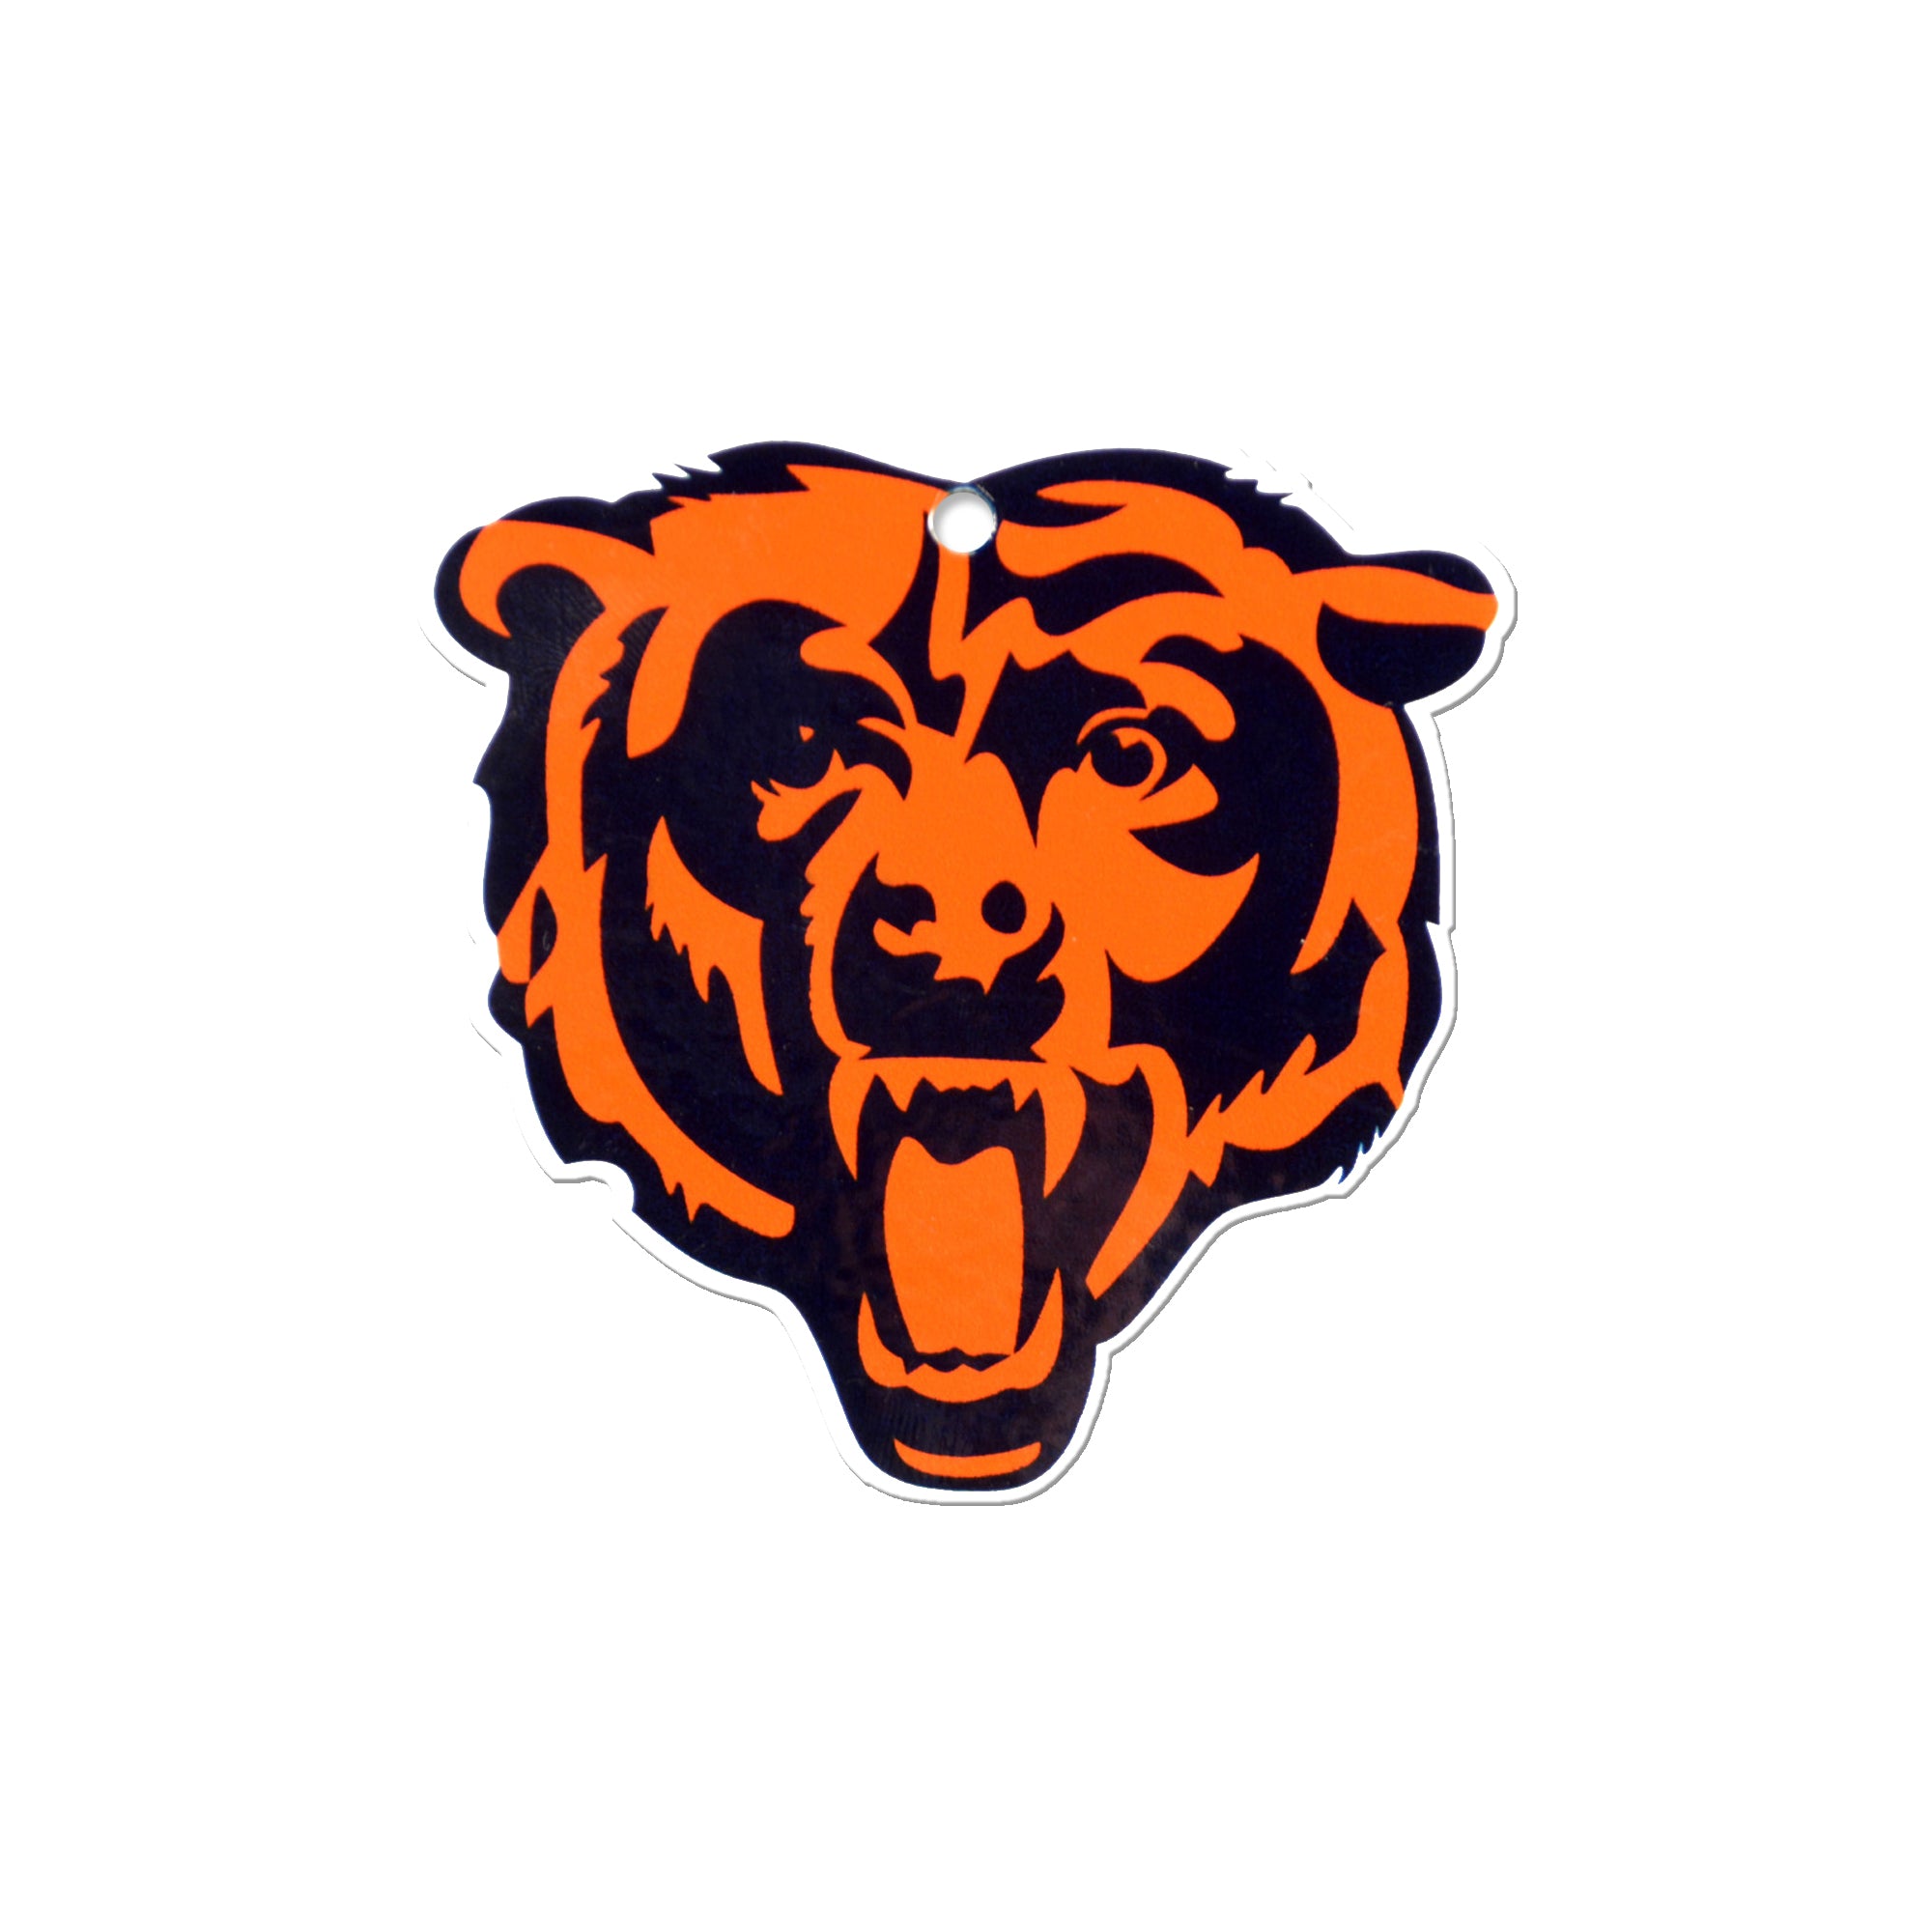 Officially Licensed NFL Chicago Bears Large Team Logo Magnet